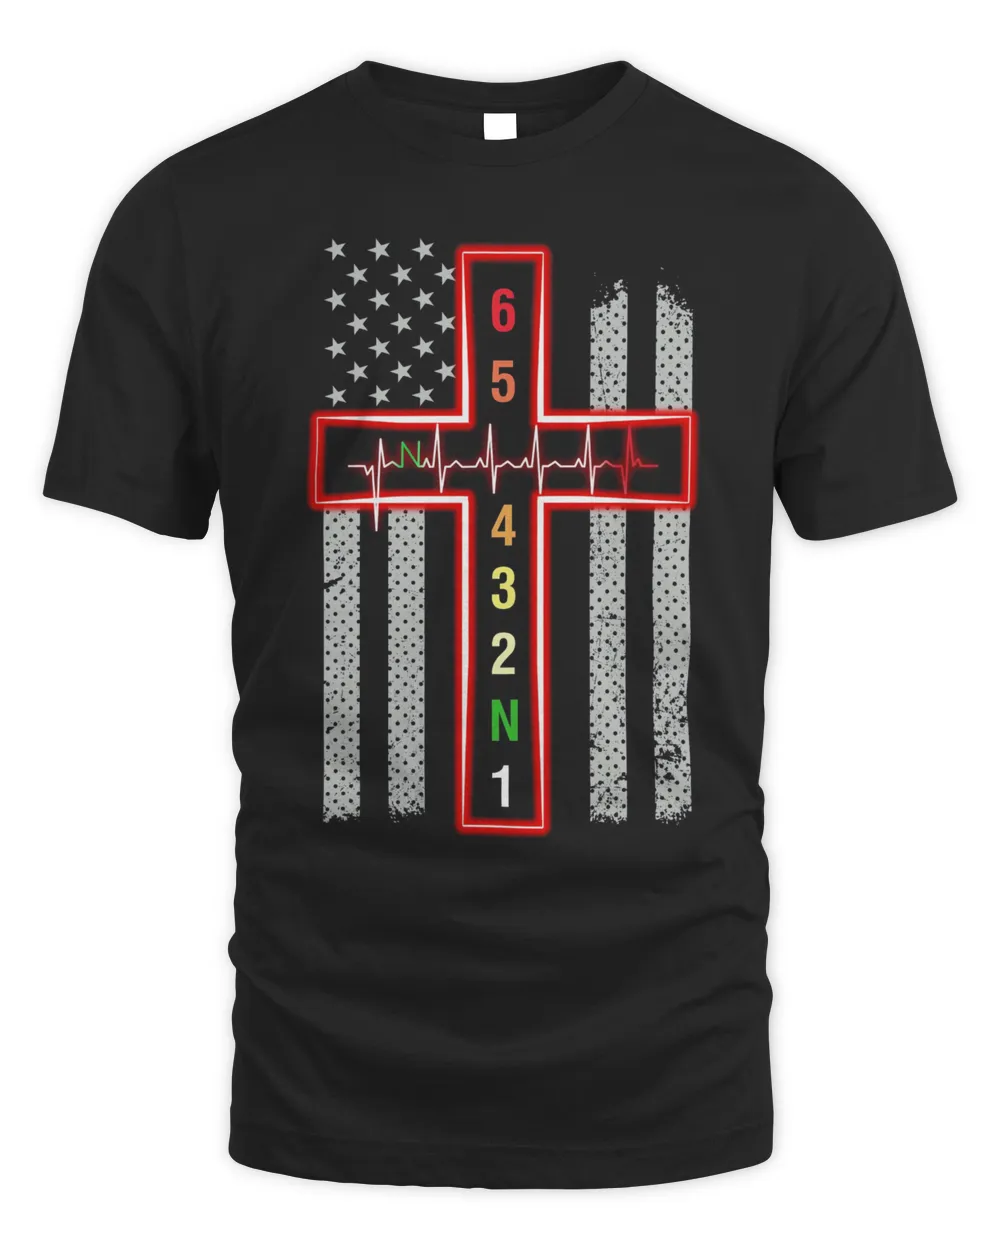 6 5 4 3 2 N 1 Jesus Heartbeat American Flag Shirt